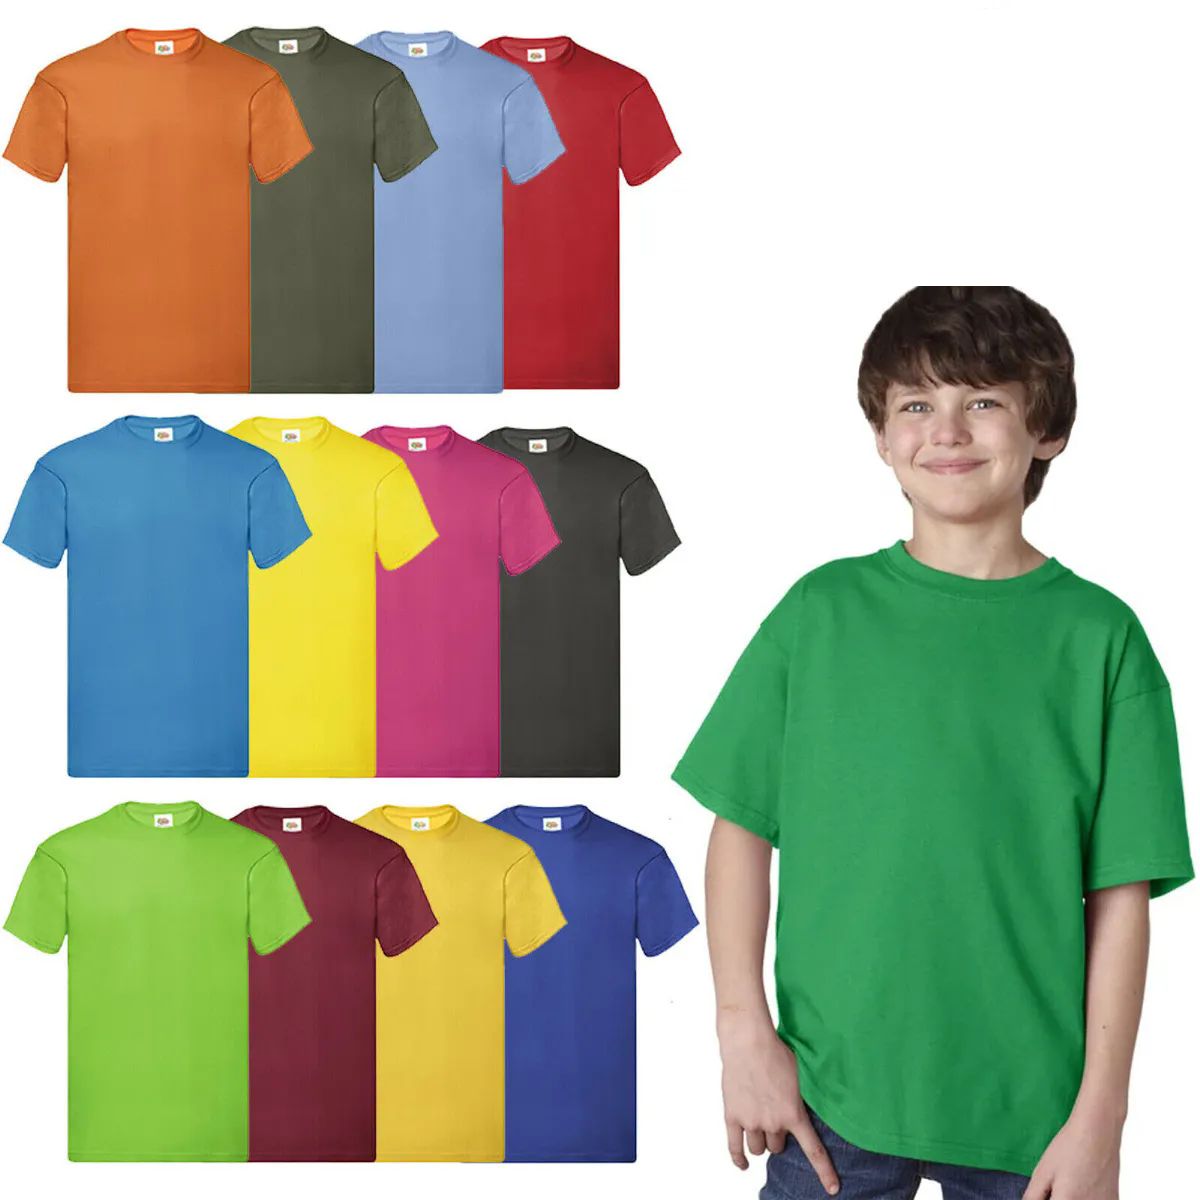 576 Wholesale Billion Hats Kids Youth Cotton Assorted Colors T Shirts Size S